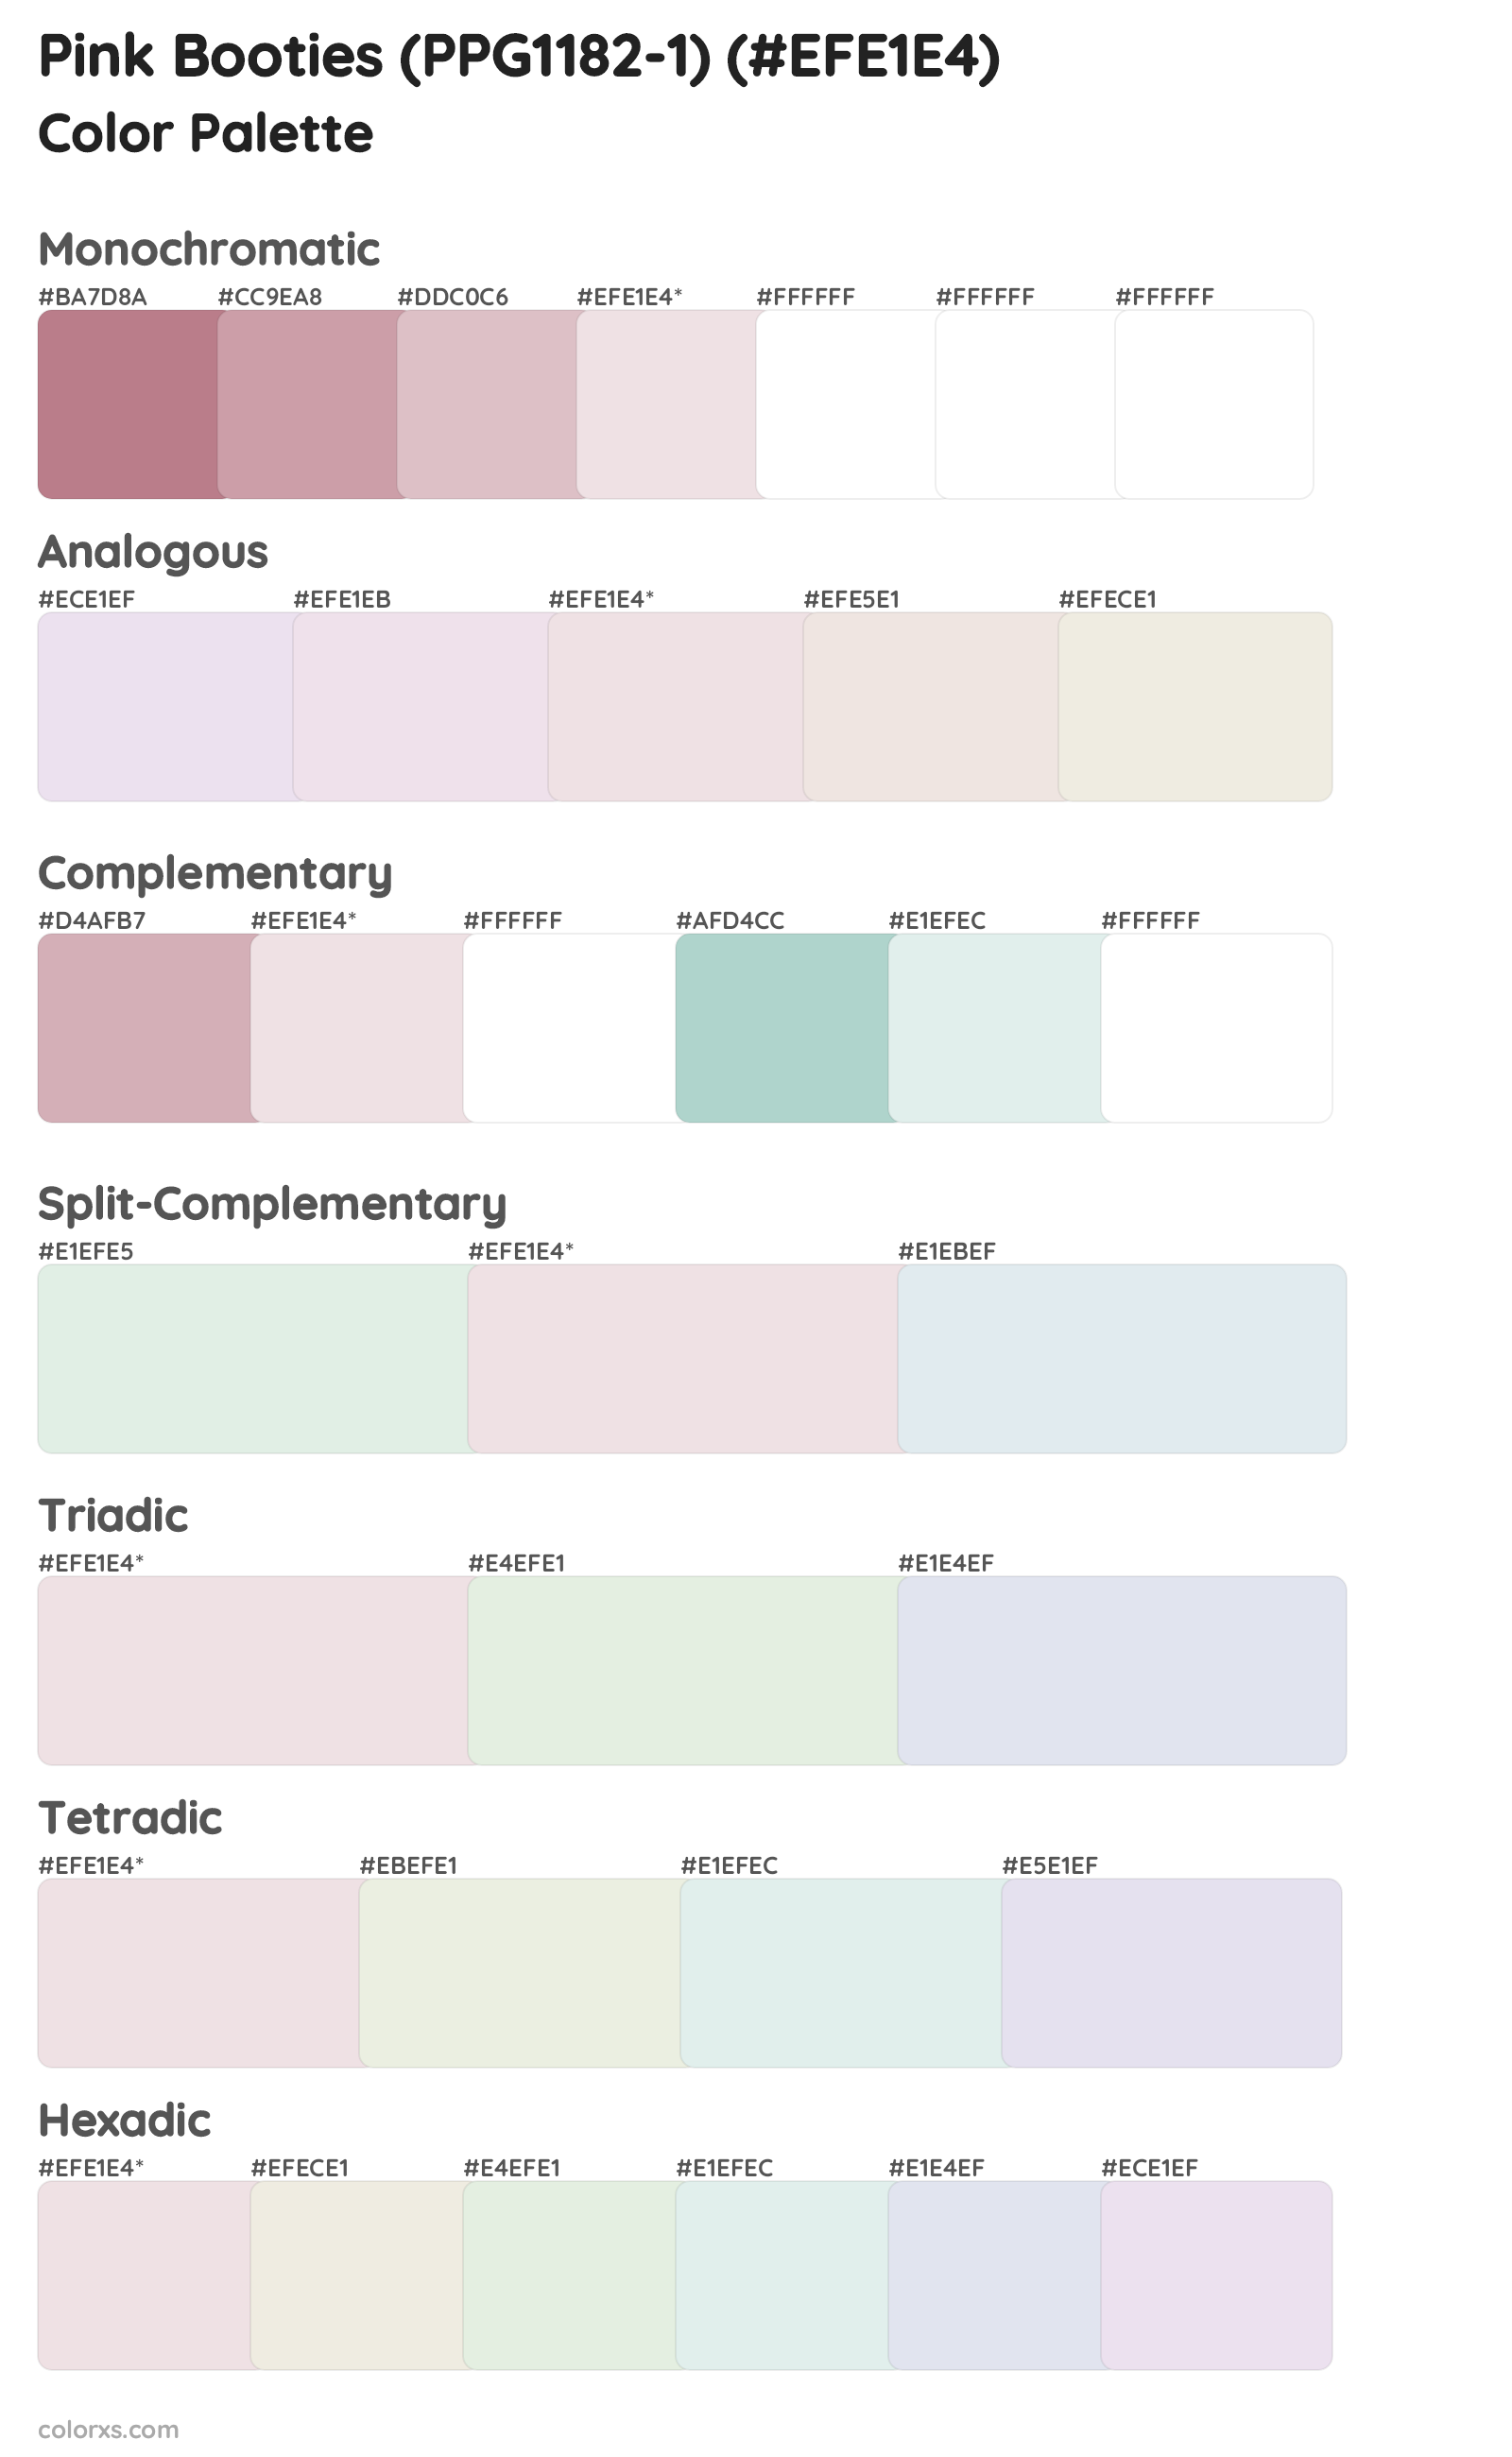 Pink Booties (PPG1182-1) Color Scheme Palettes